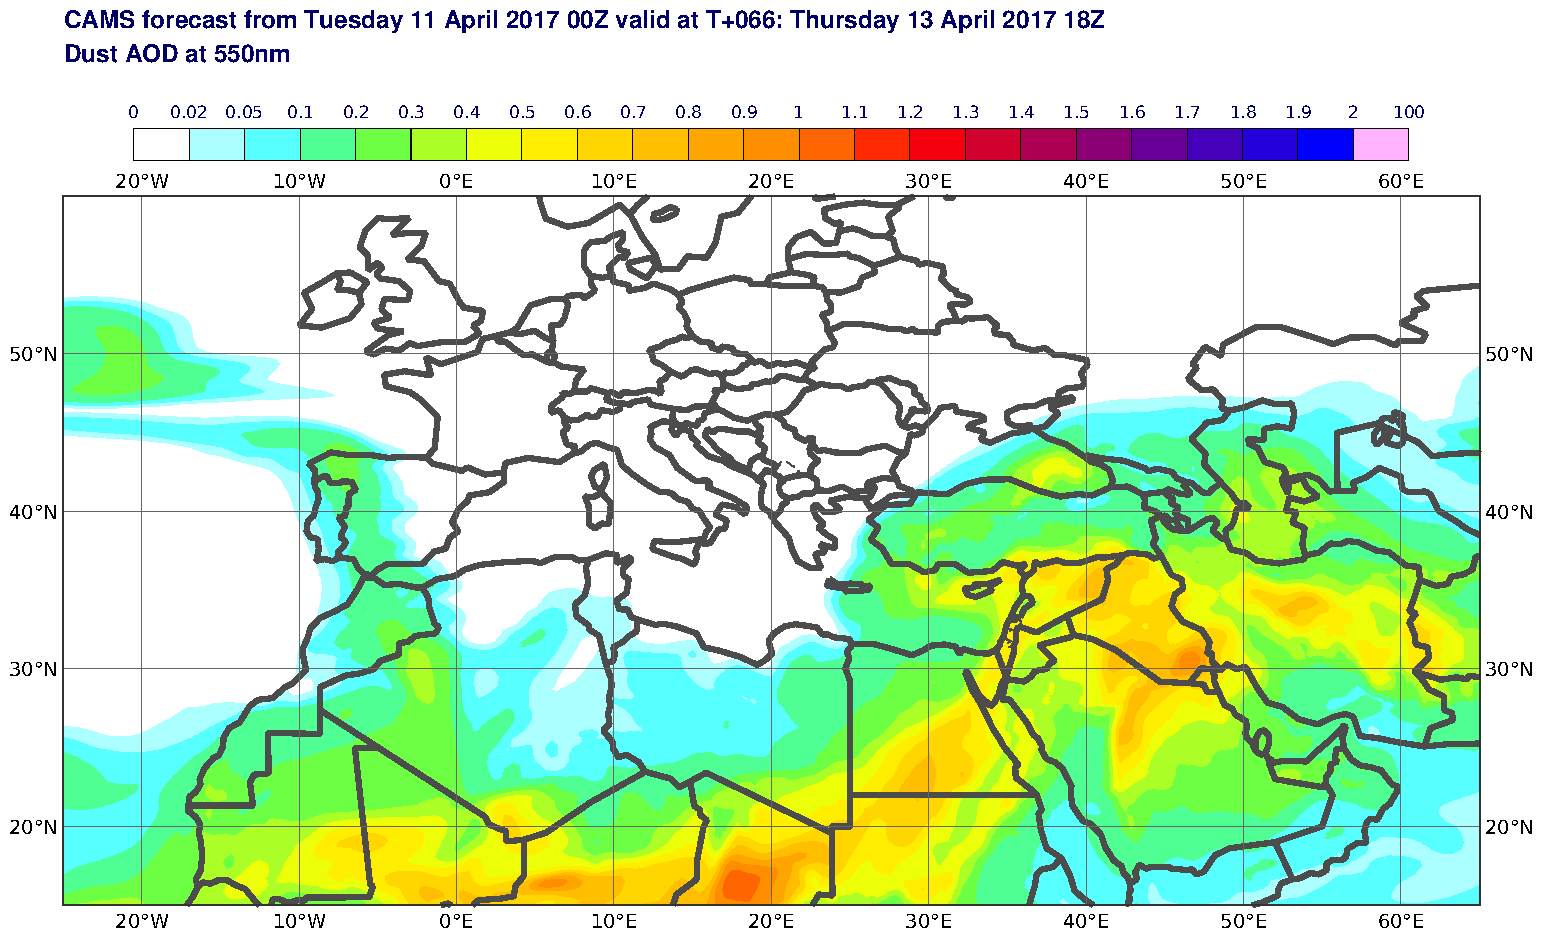 Dust AOD at 550nm valid at T66 - 2017-04-13 18:00